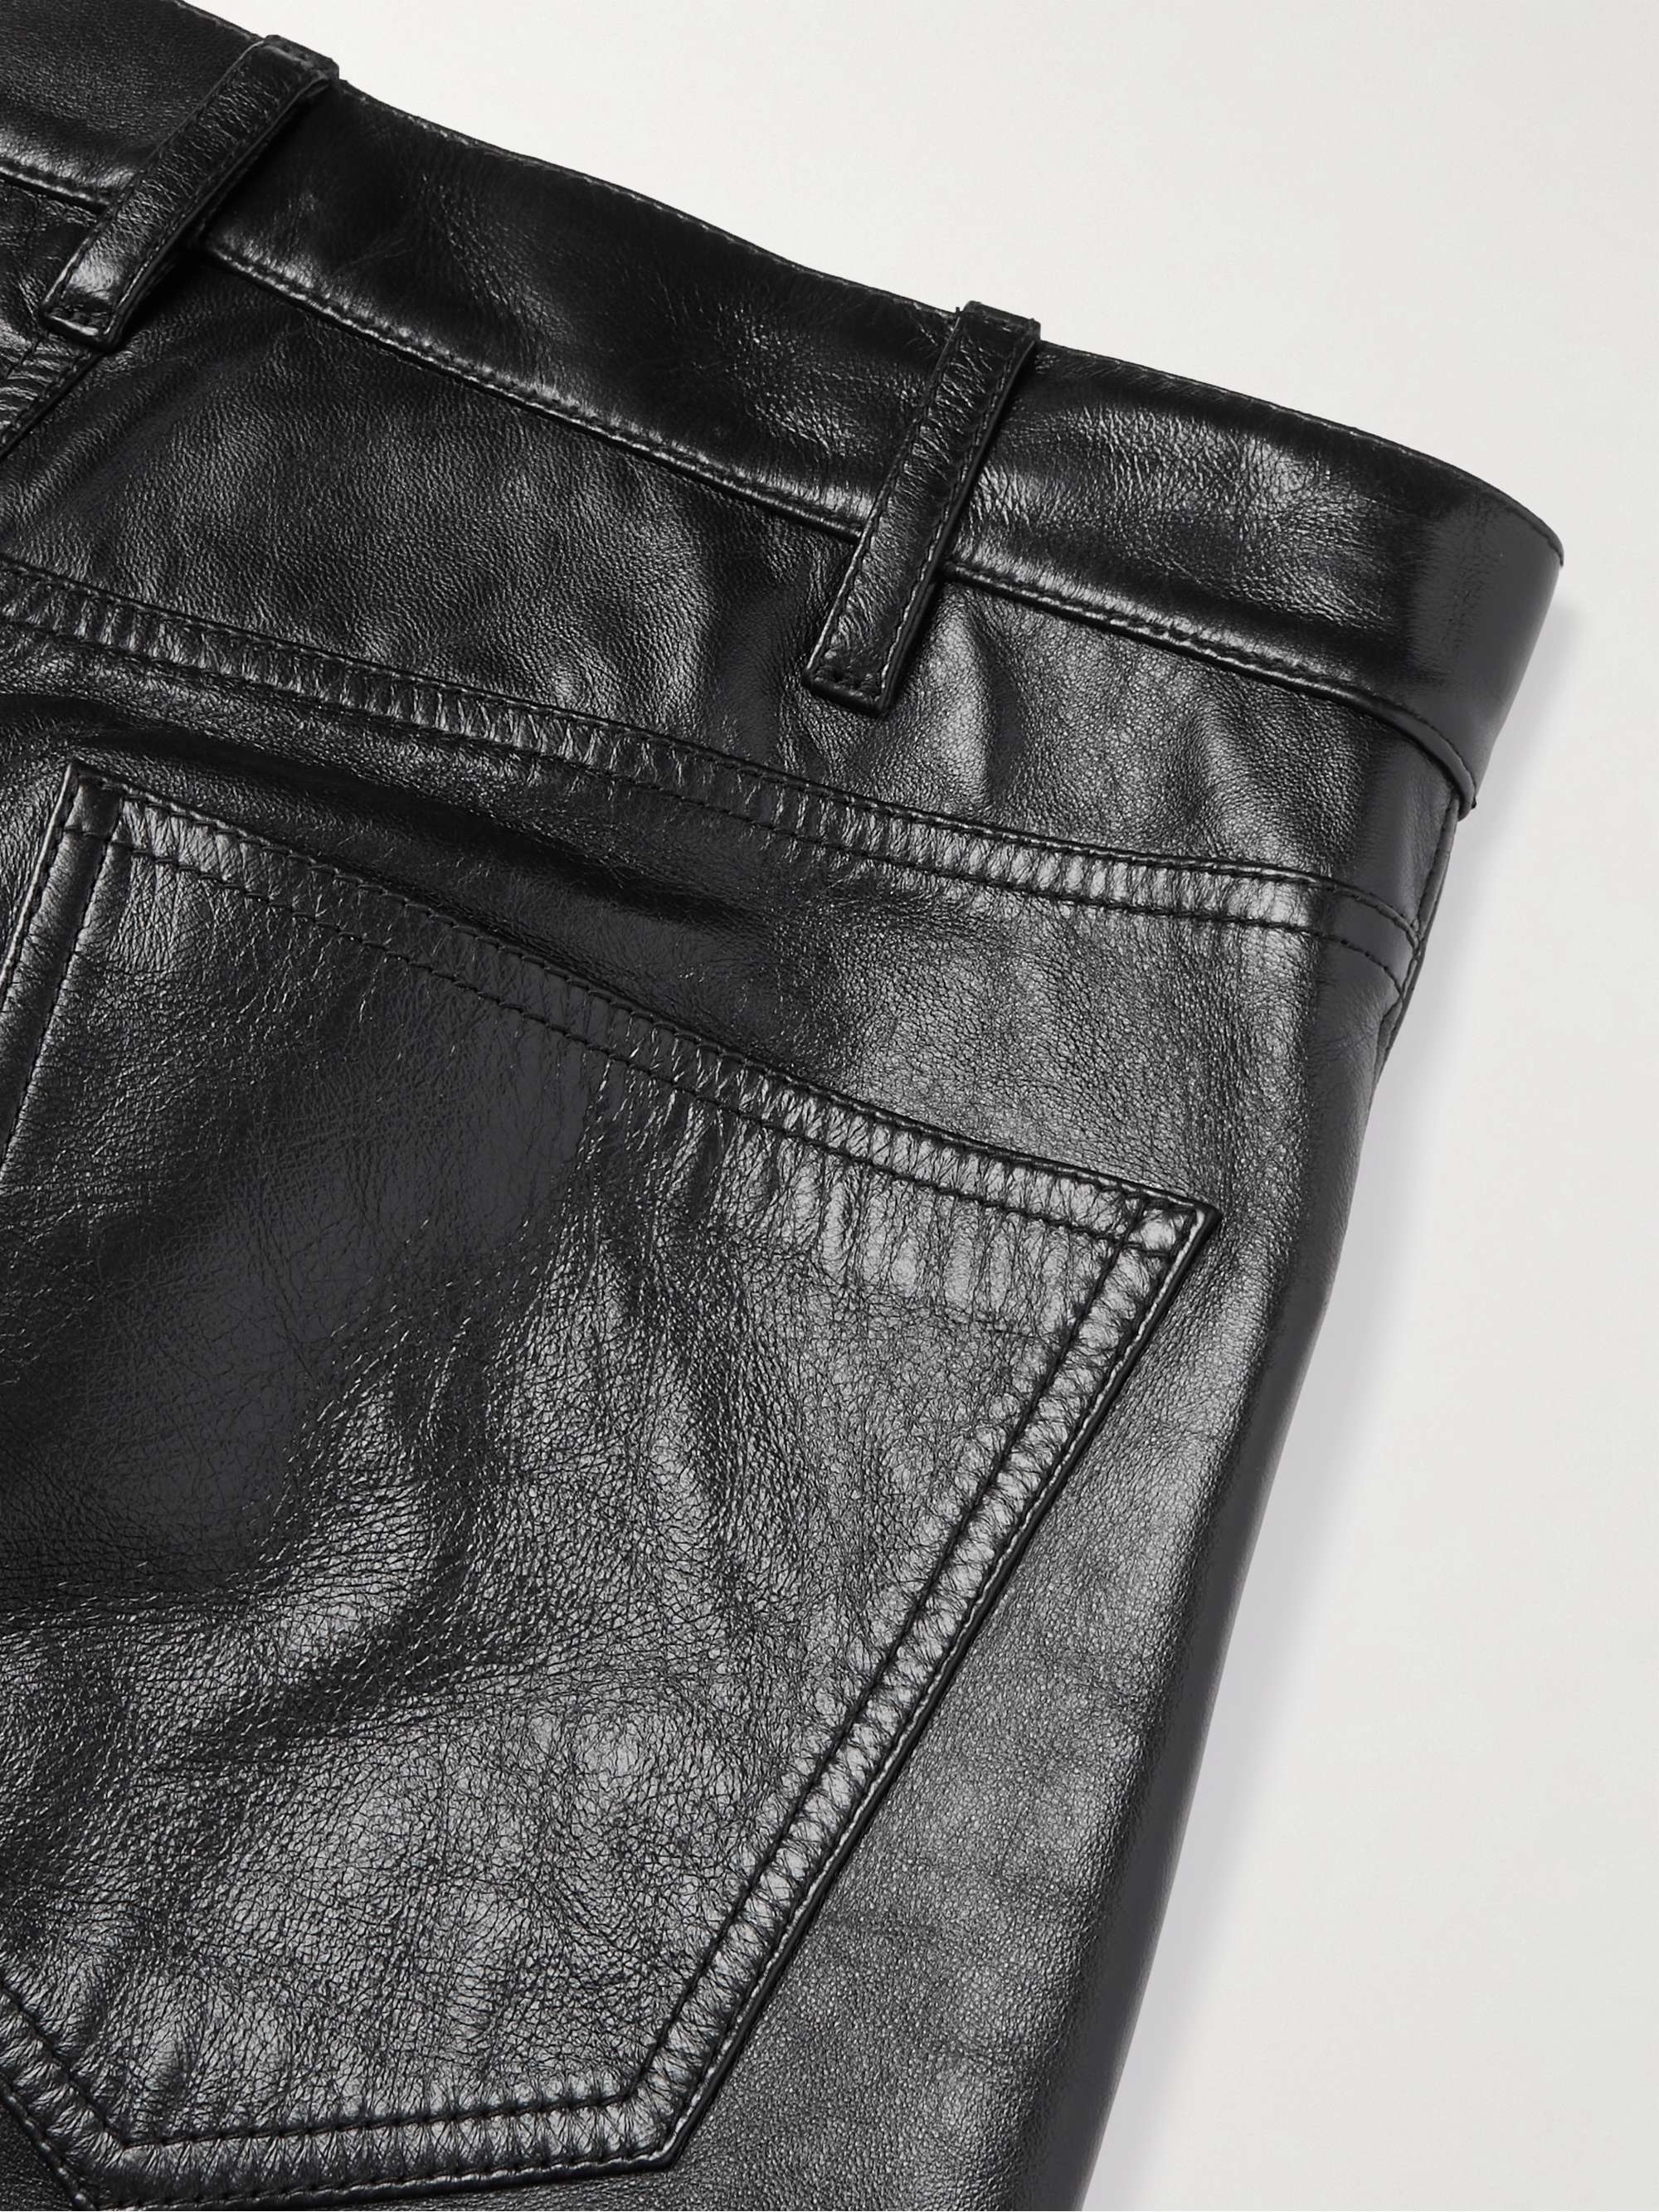 CELINE HOMME Panelled Full-Grain Leather Trousers